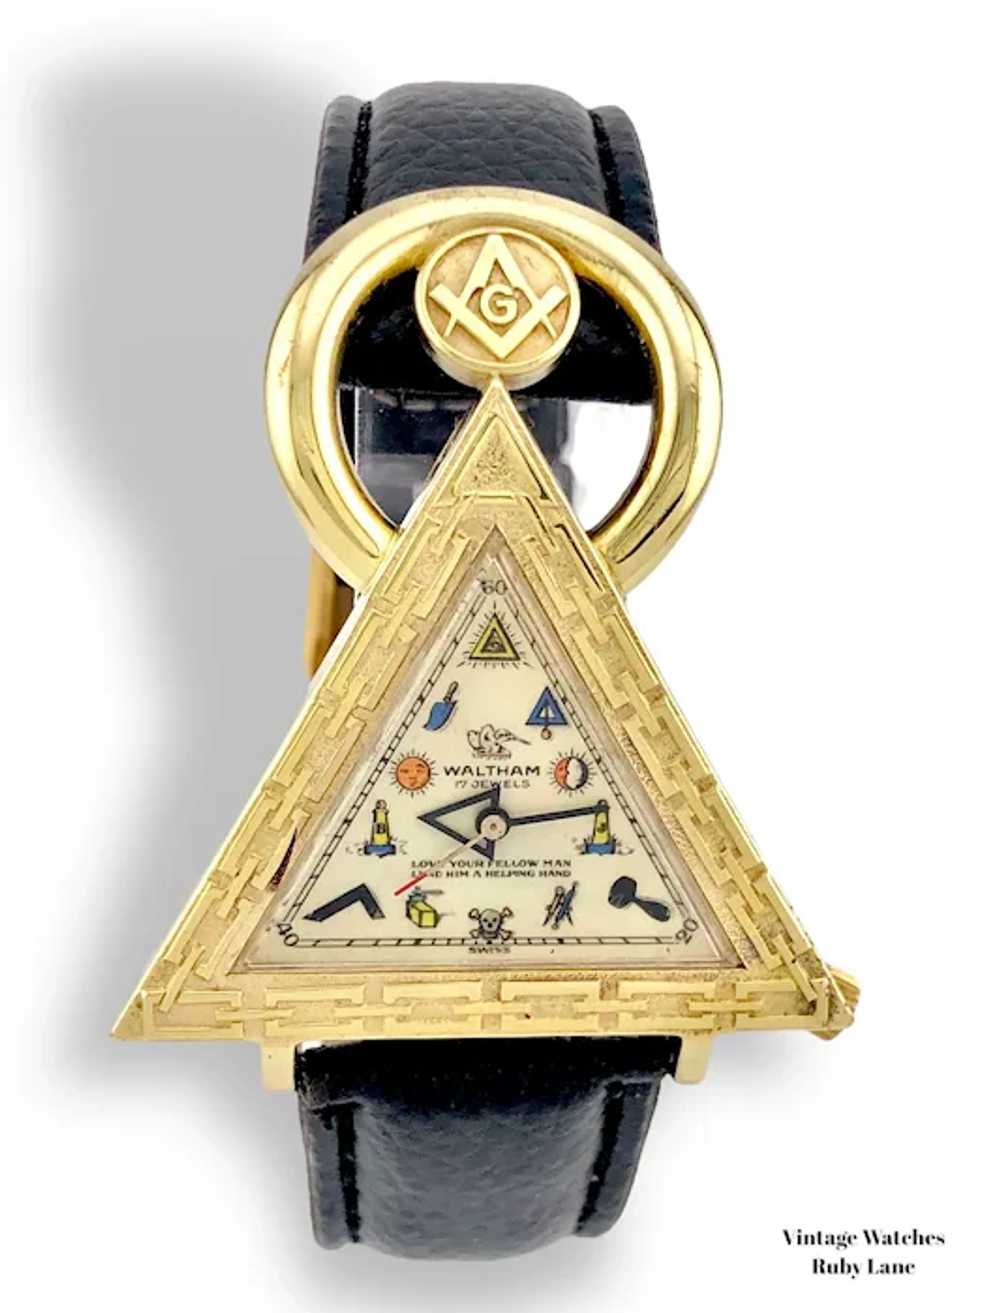 1965 American Waltham Masonic Vintage Watch - image 2